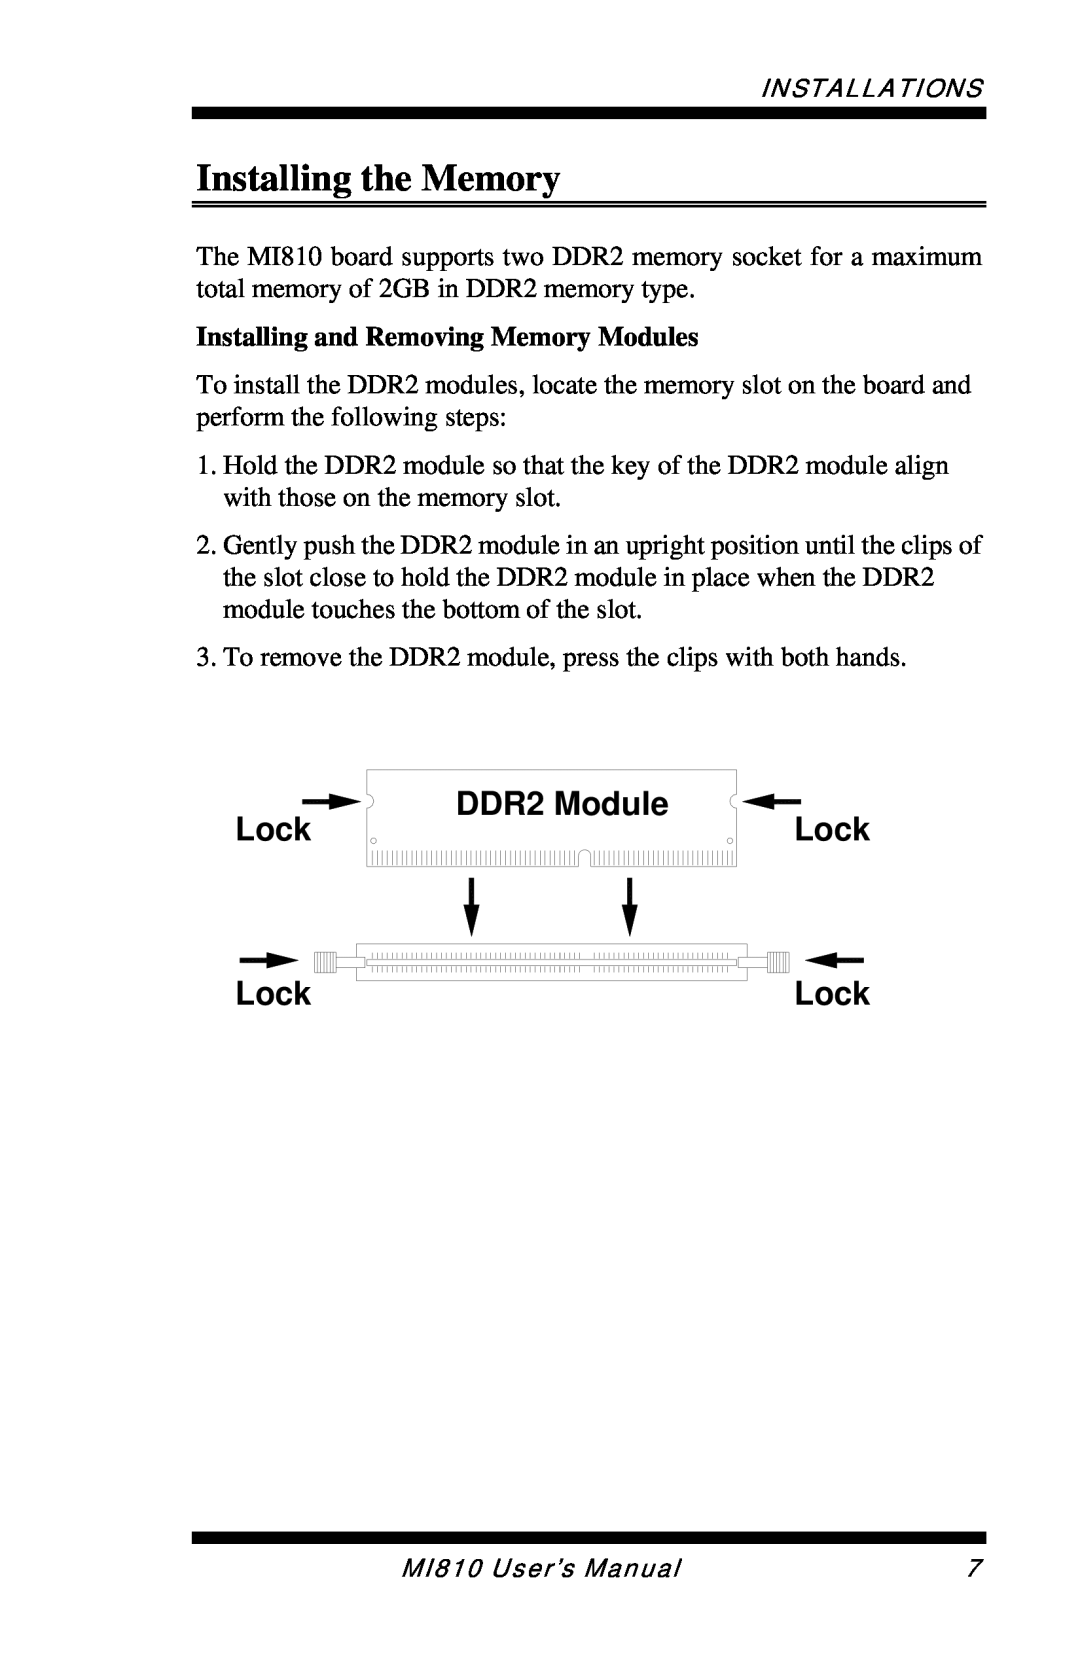 Intel MI810 user manual Installing the Memory, DDR2 Module Lock, Installing and Removing Memory Modules 